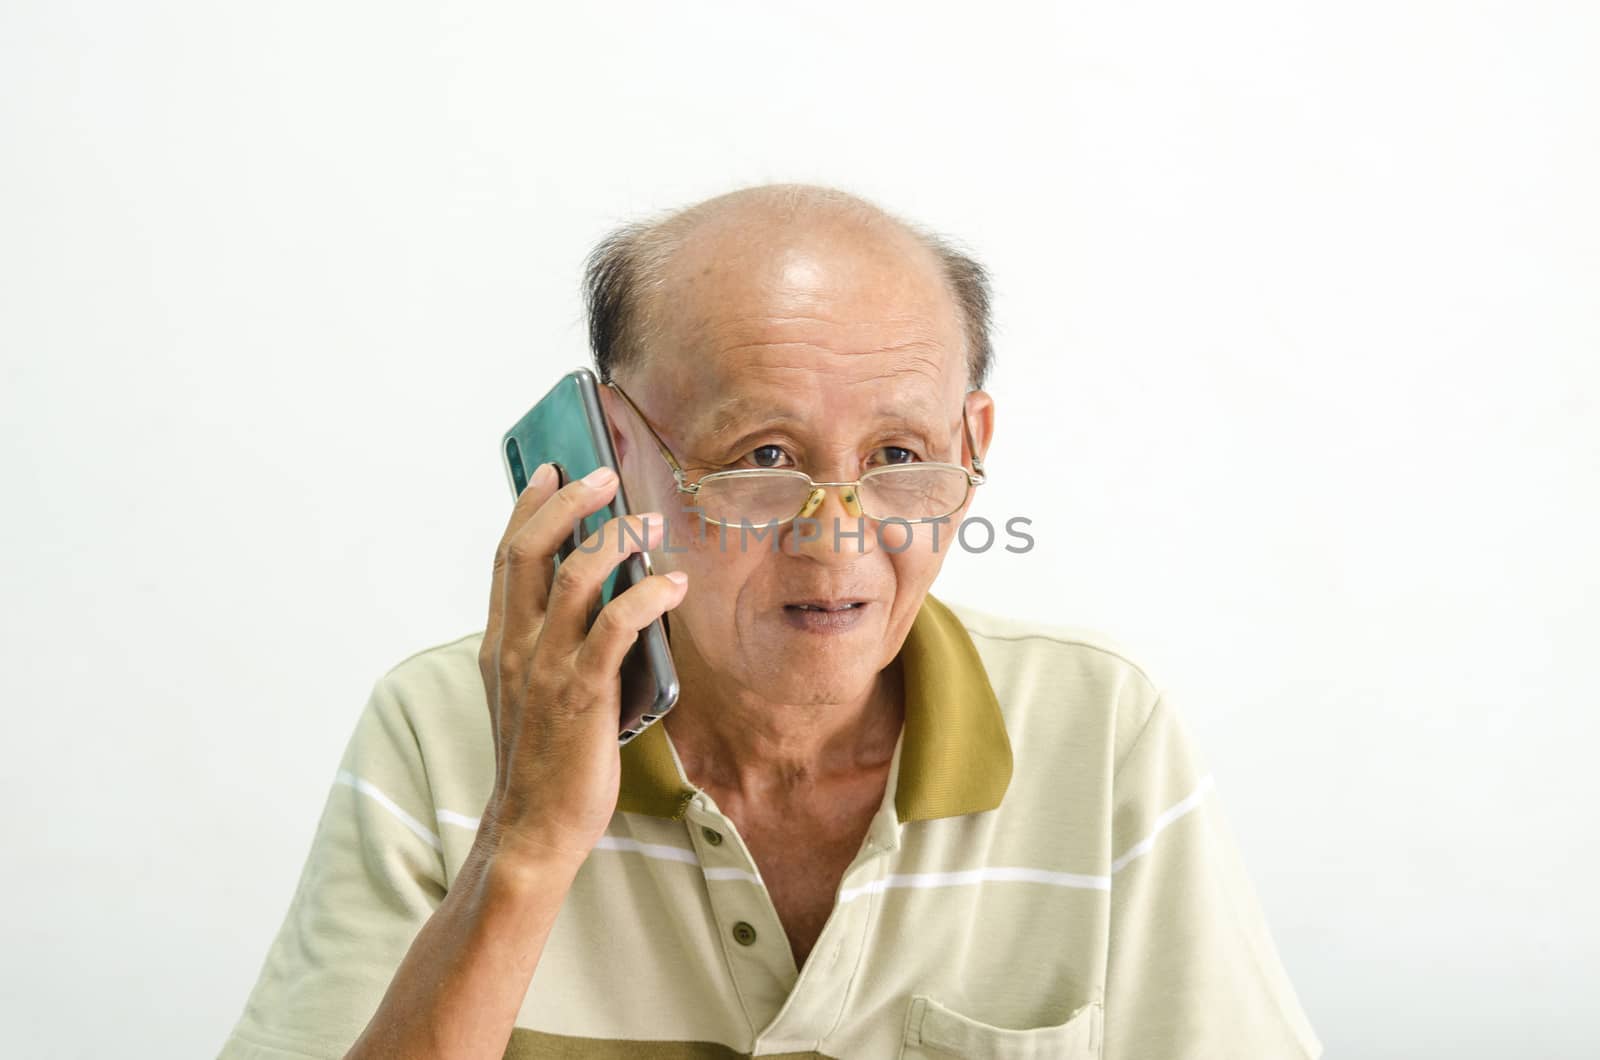 older senior men portrait.Bald Asian man wearing glasses talking on the phone